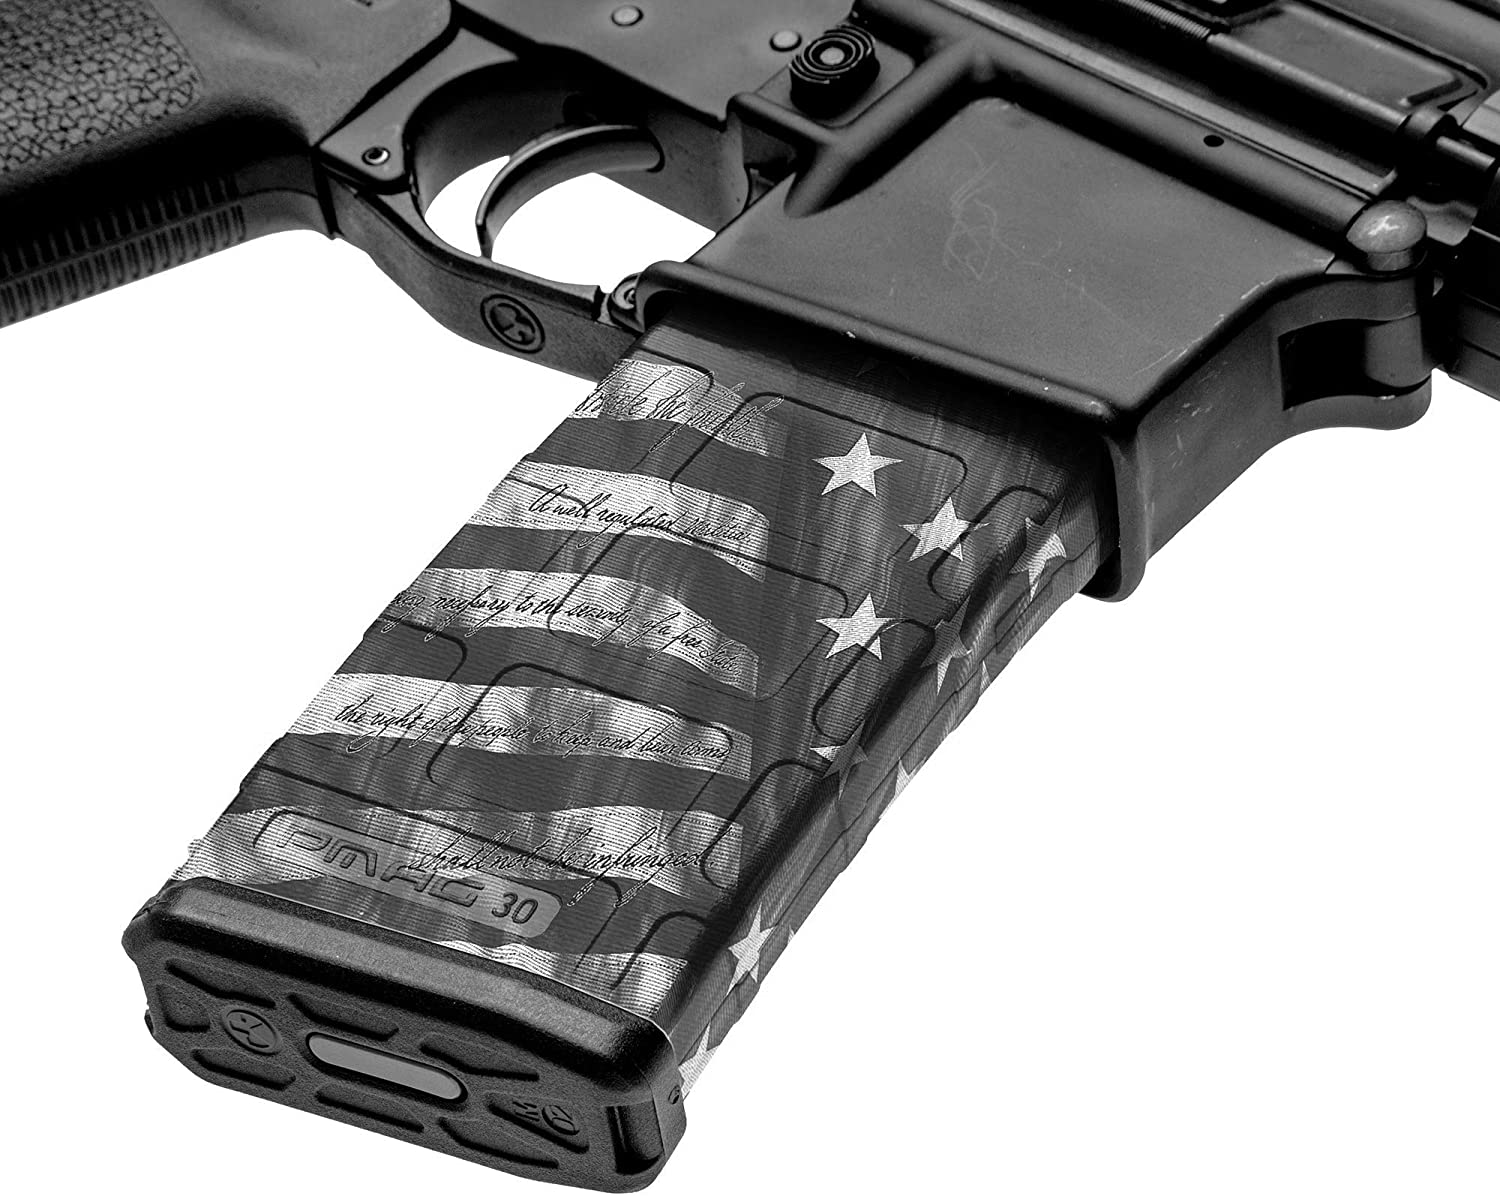  GOLD HOOK Pistol Skin Heavy Duty Vinyl Gun Wrap with Matte  Finish Waterproof Non-Reflective - Made in USA (FITS Any Handgun) : Sports  & Outdoors